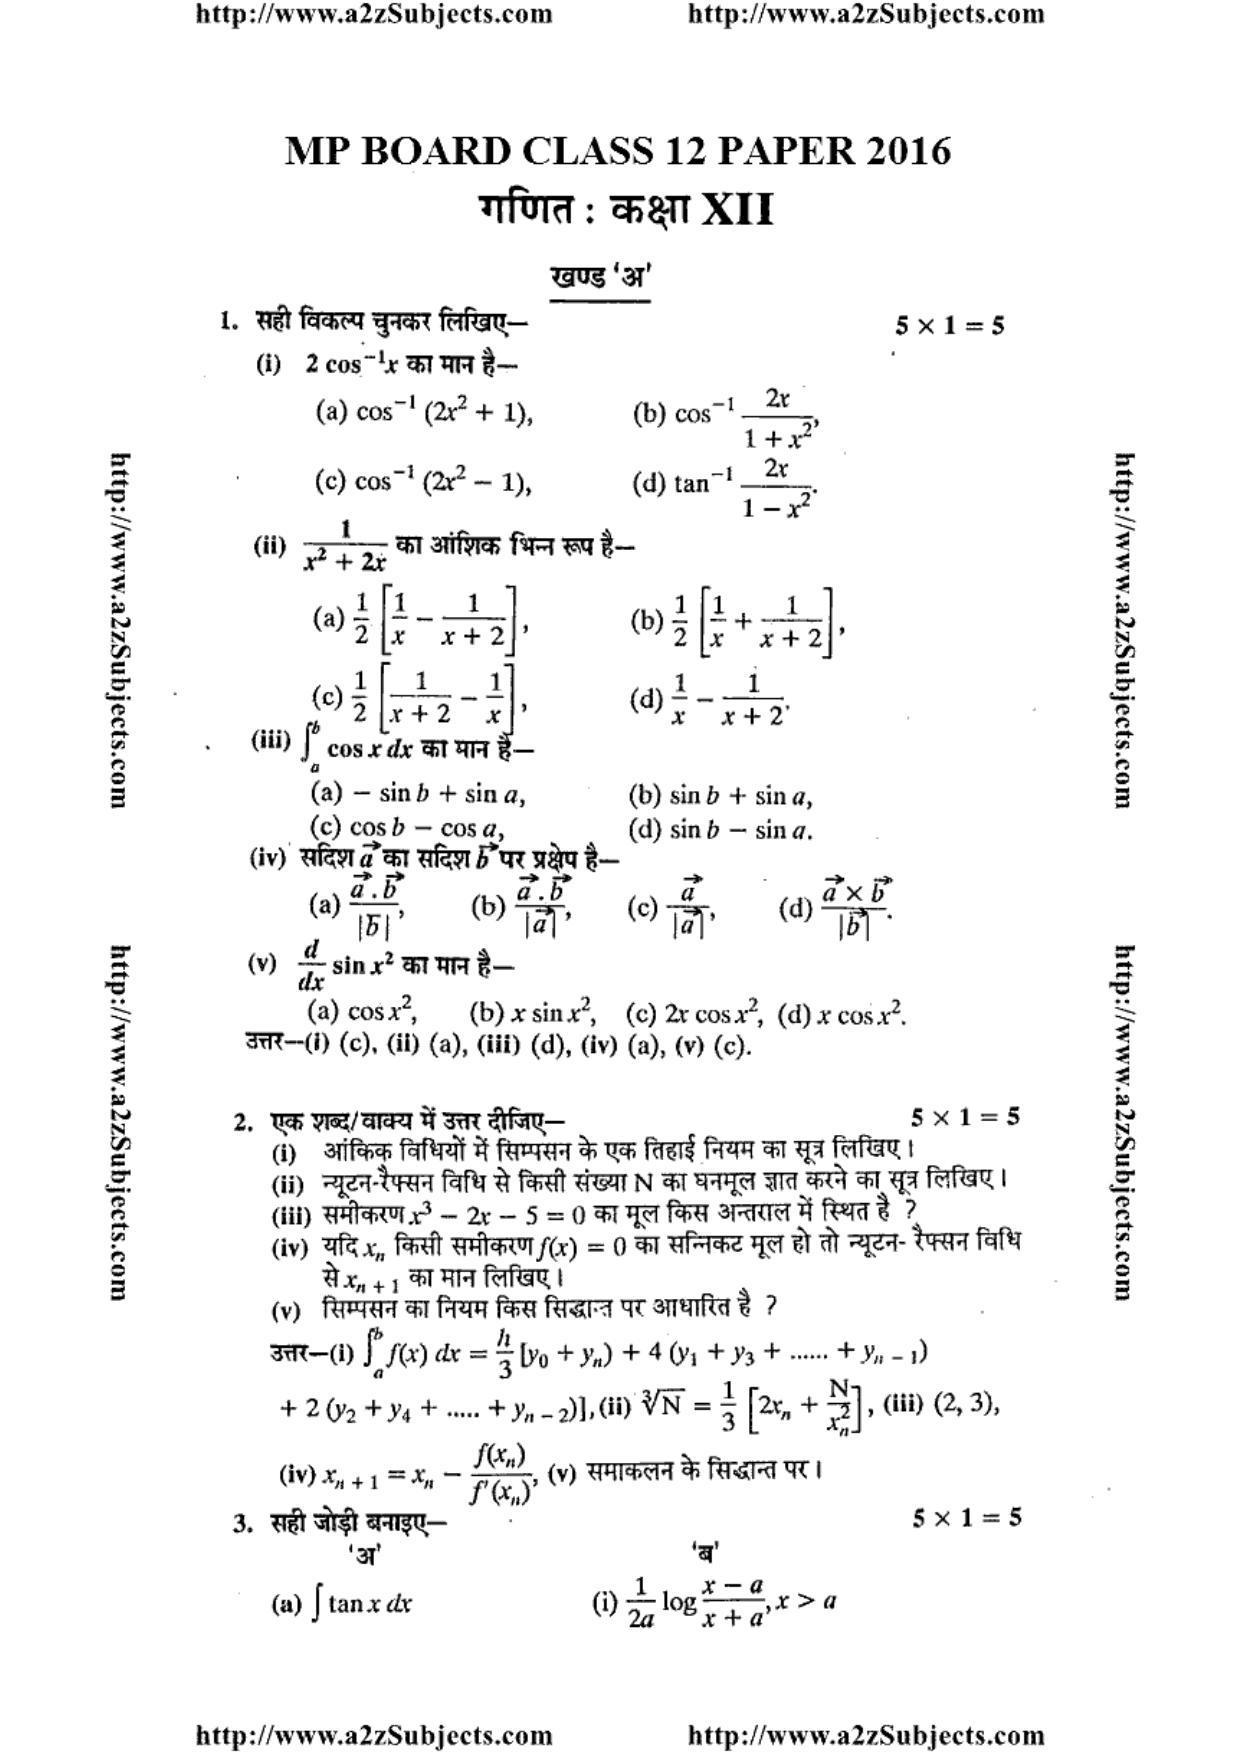 MP Board Class 12 Mathematica 2016 Question Paper - Page 1